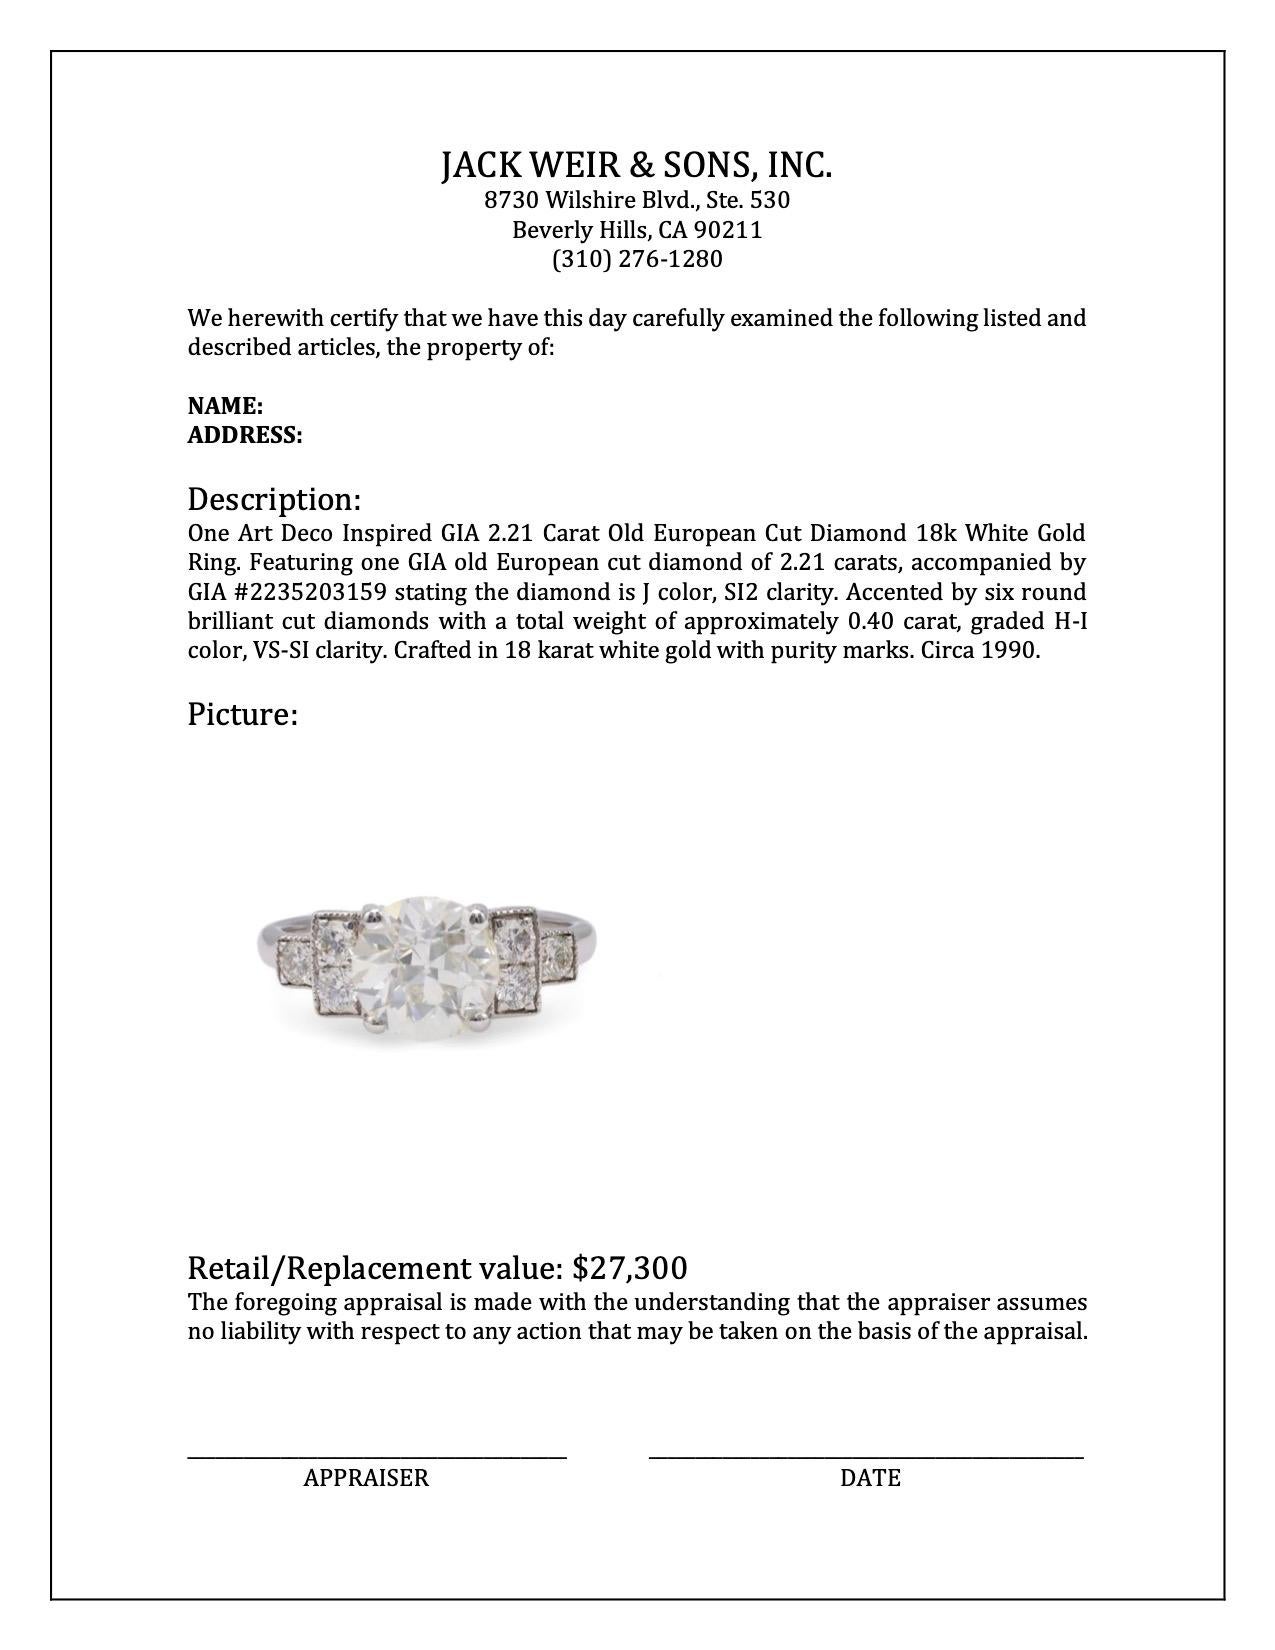 Art Deco Inspired GIA 2.21 Carat Old European Cut Diamond 18k White Gold Ring 3